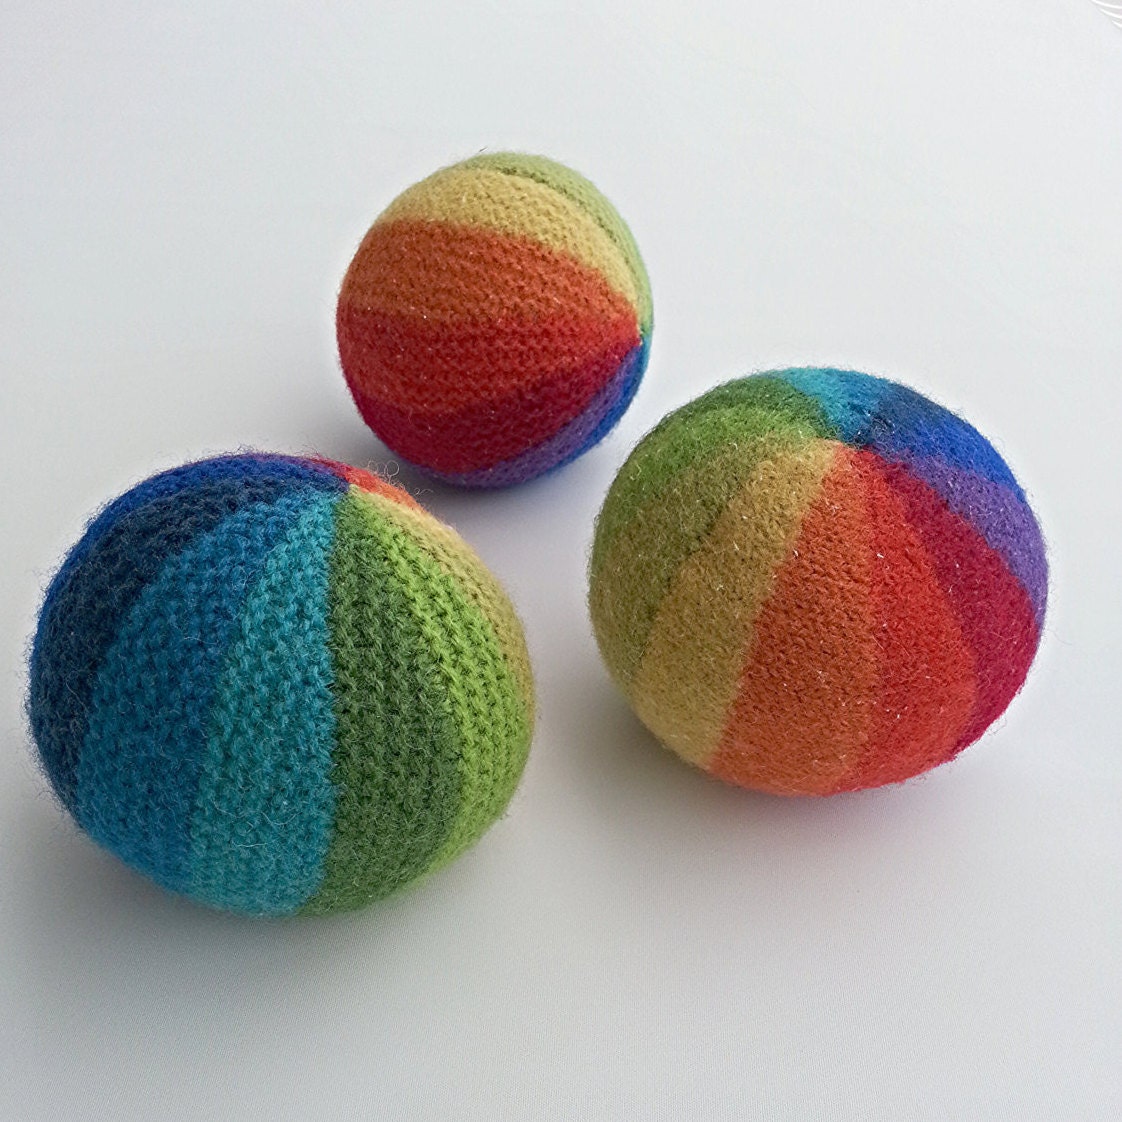 knitting-pattern-knitted-balls-rainbow-ball-soccer-ball-marble